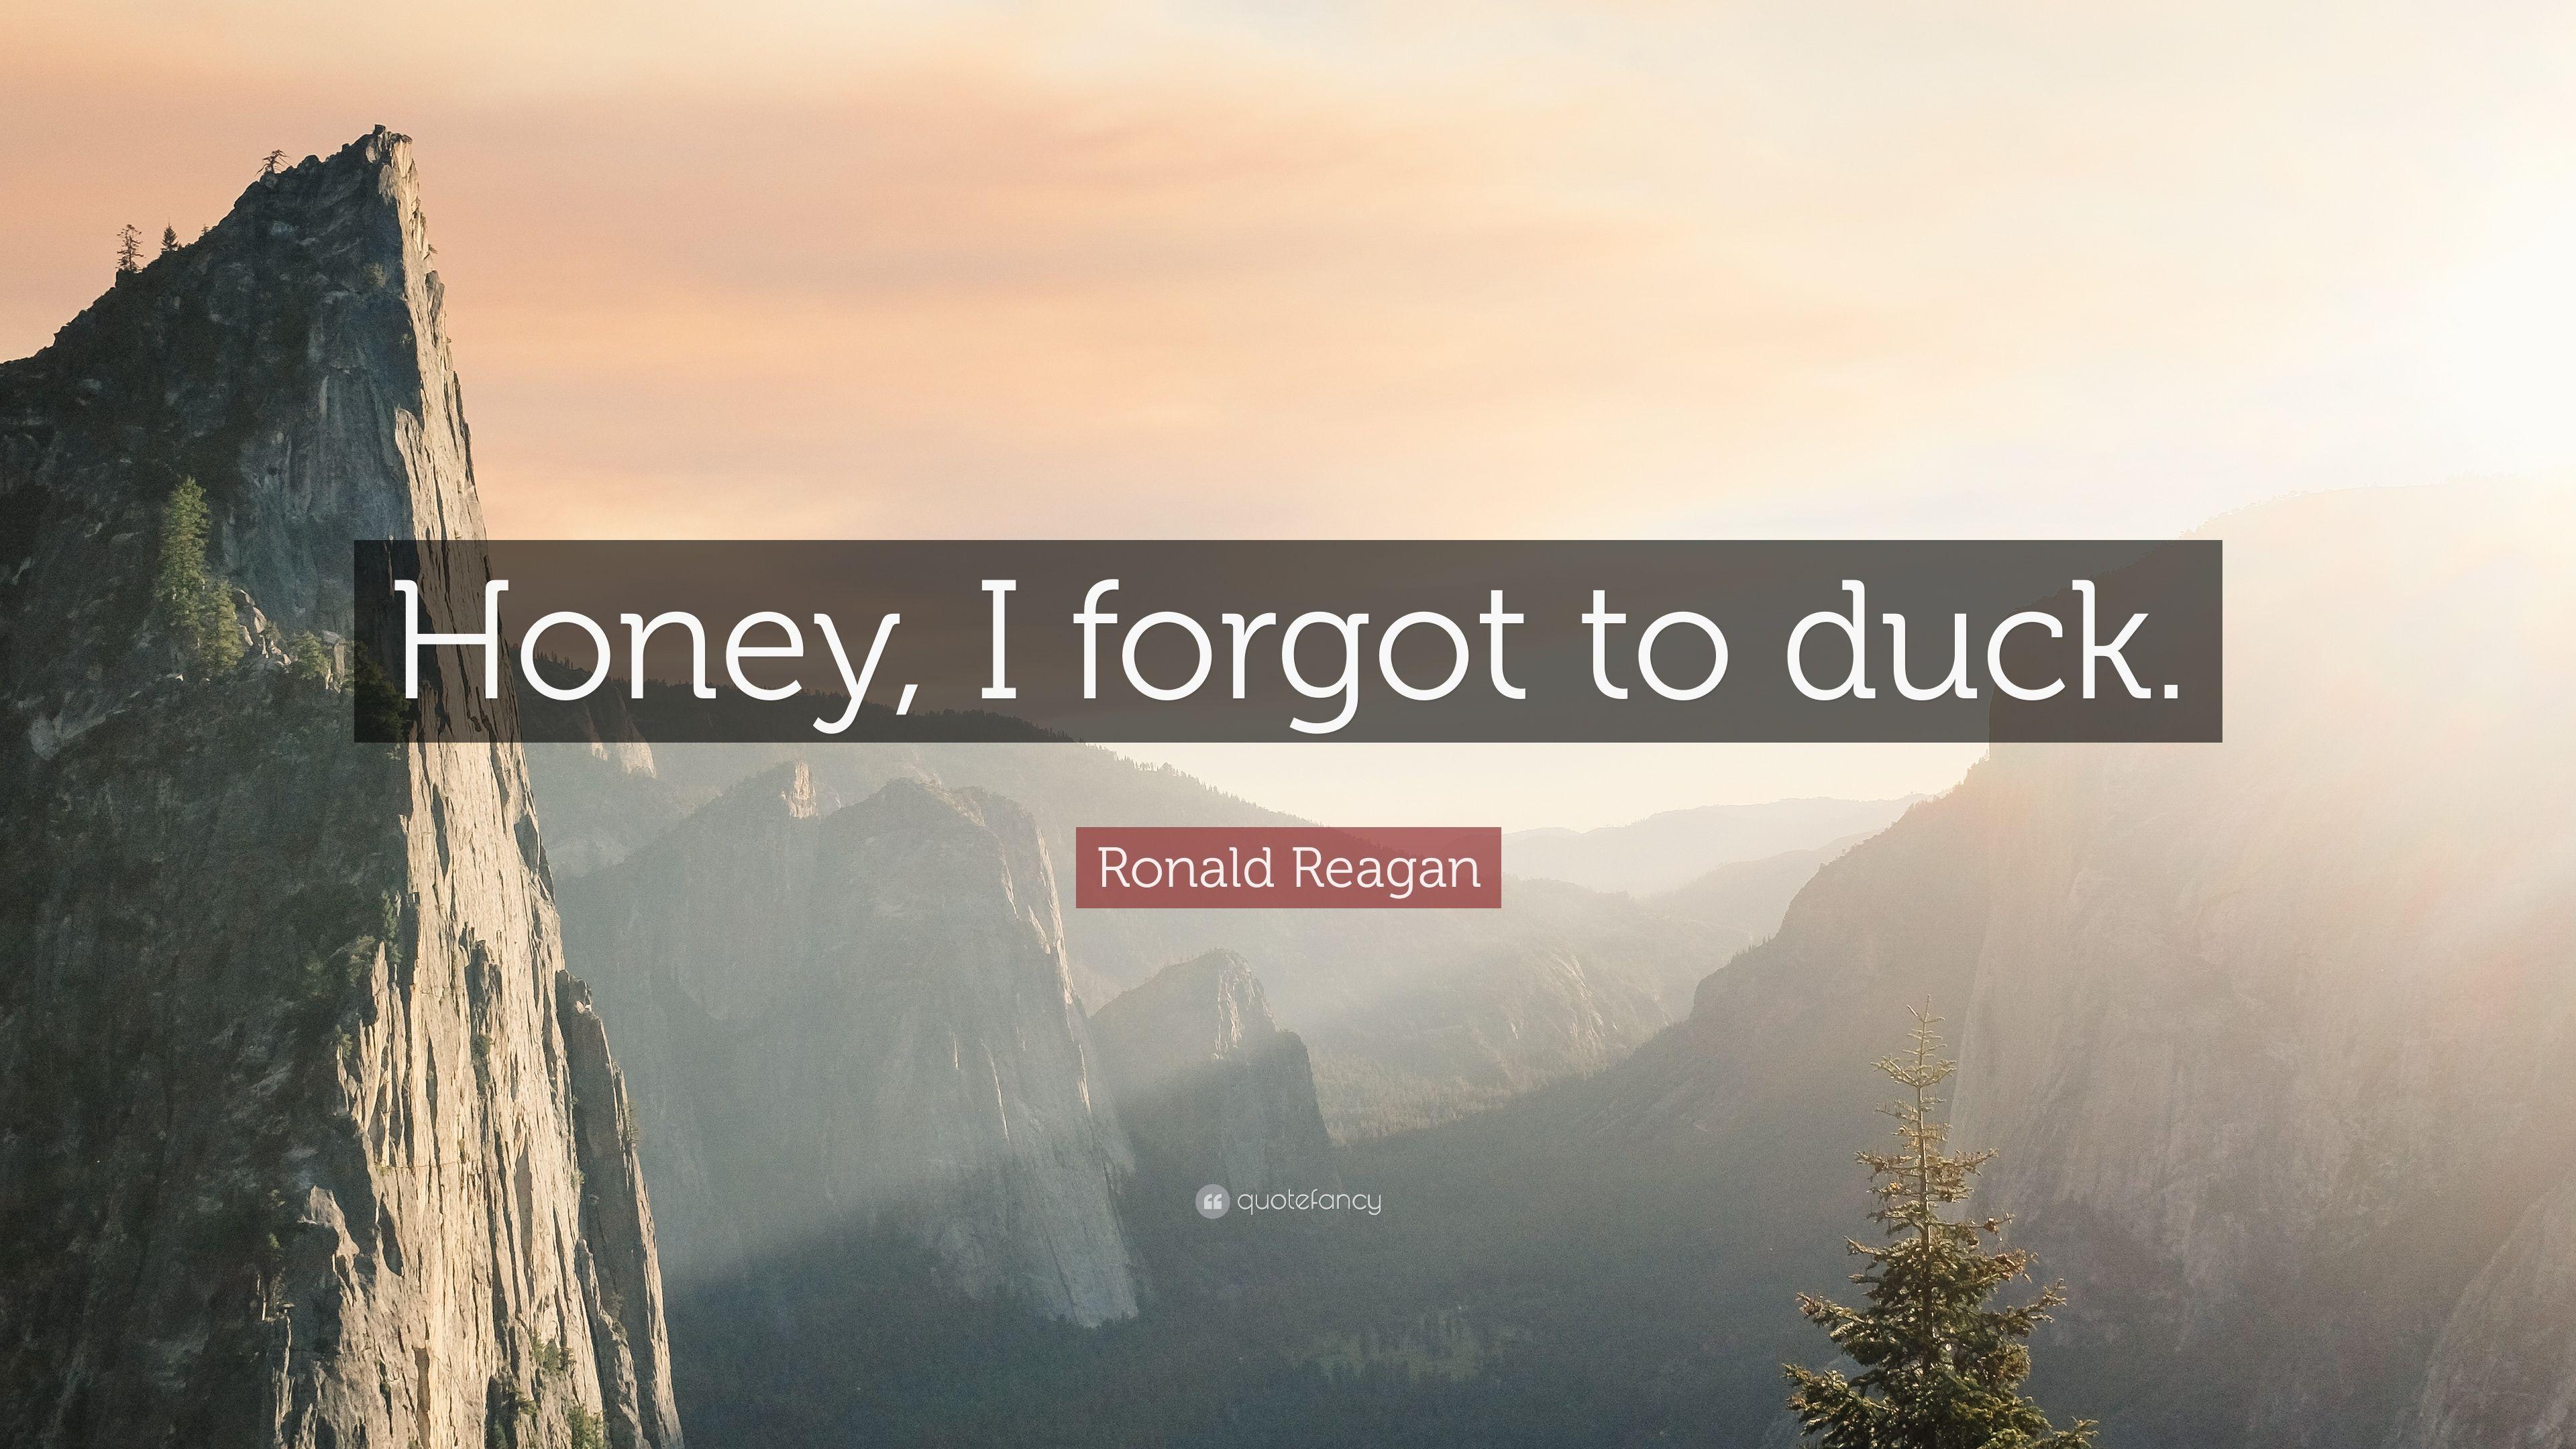 Ronald Reagan Quote: "Honey, I forgot to duck. 